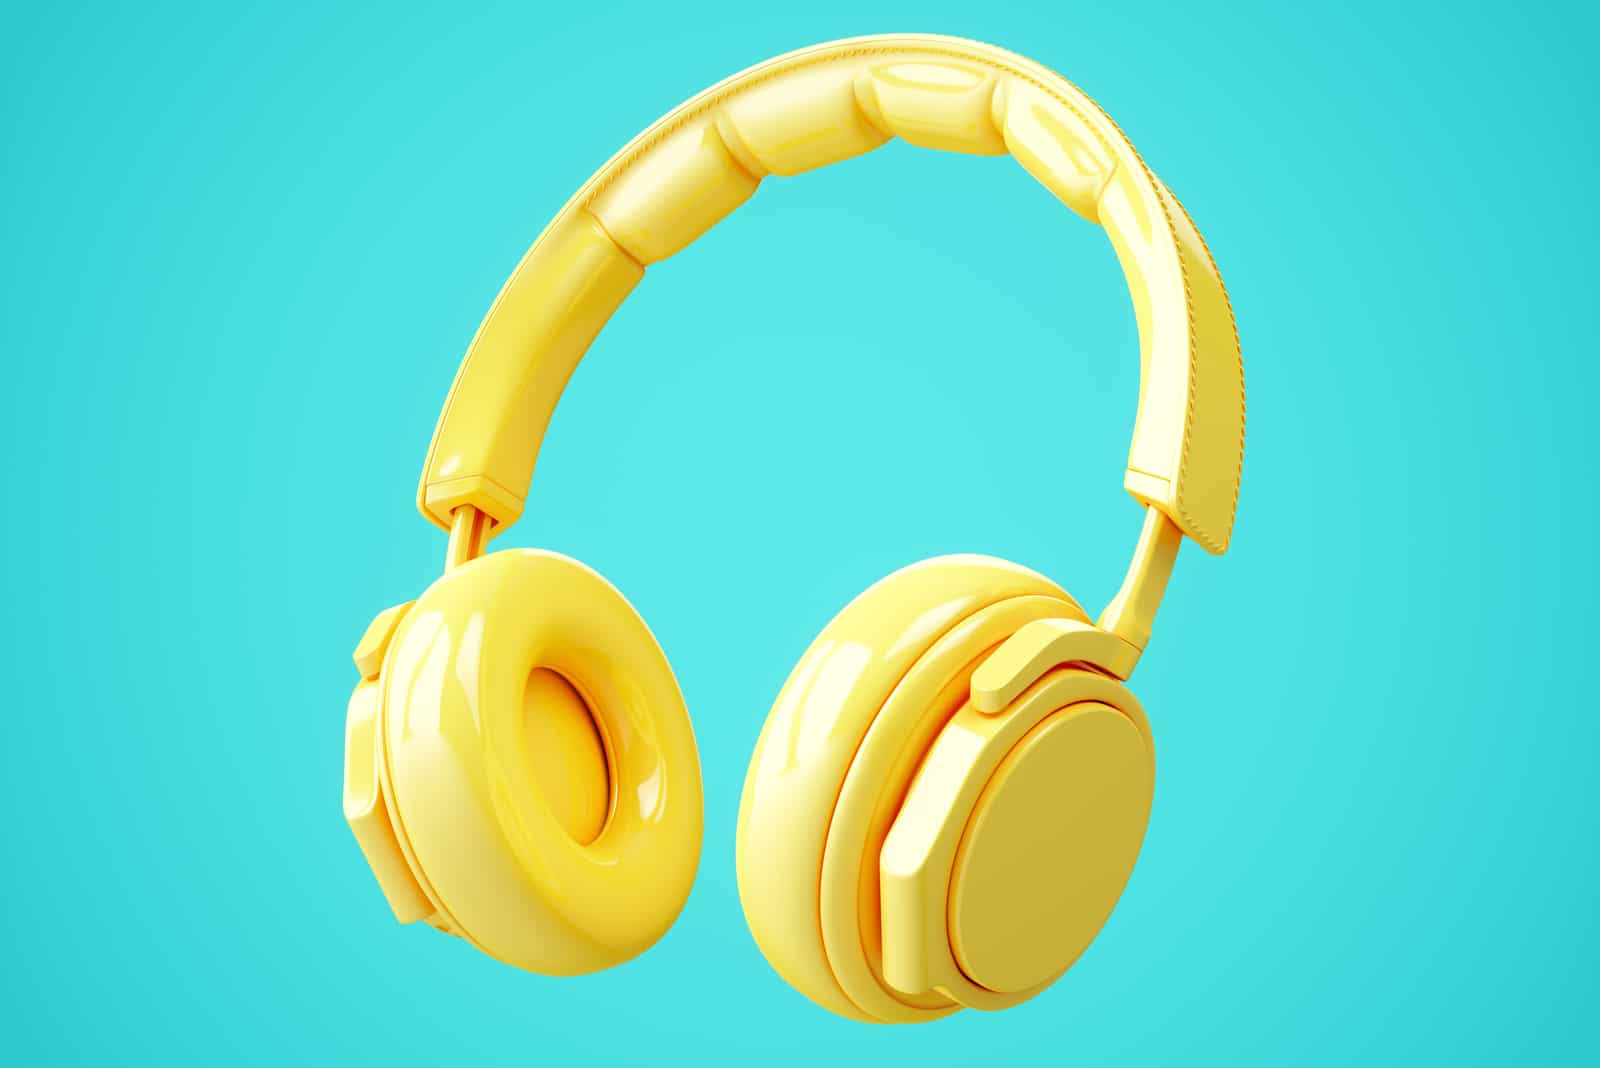 yellow headphones isolated on blue background